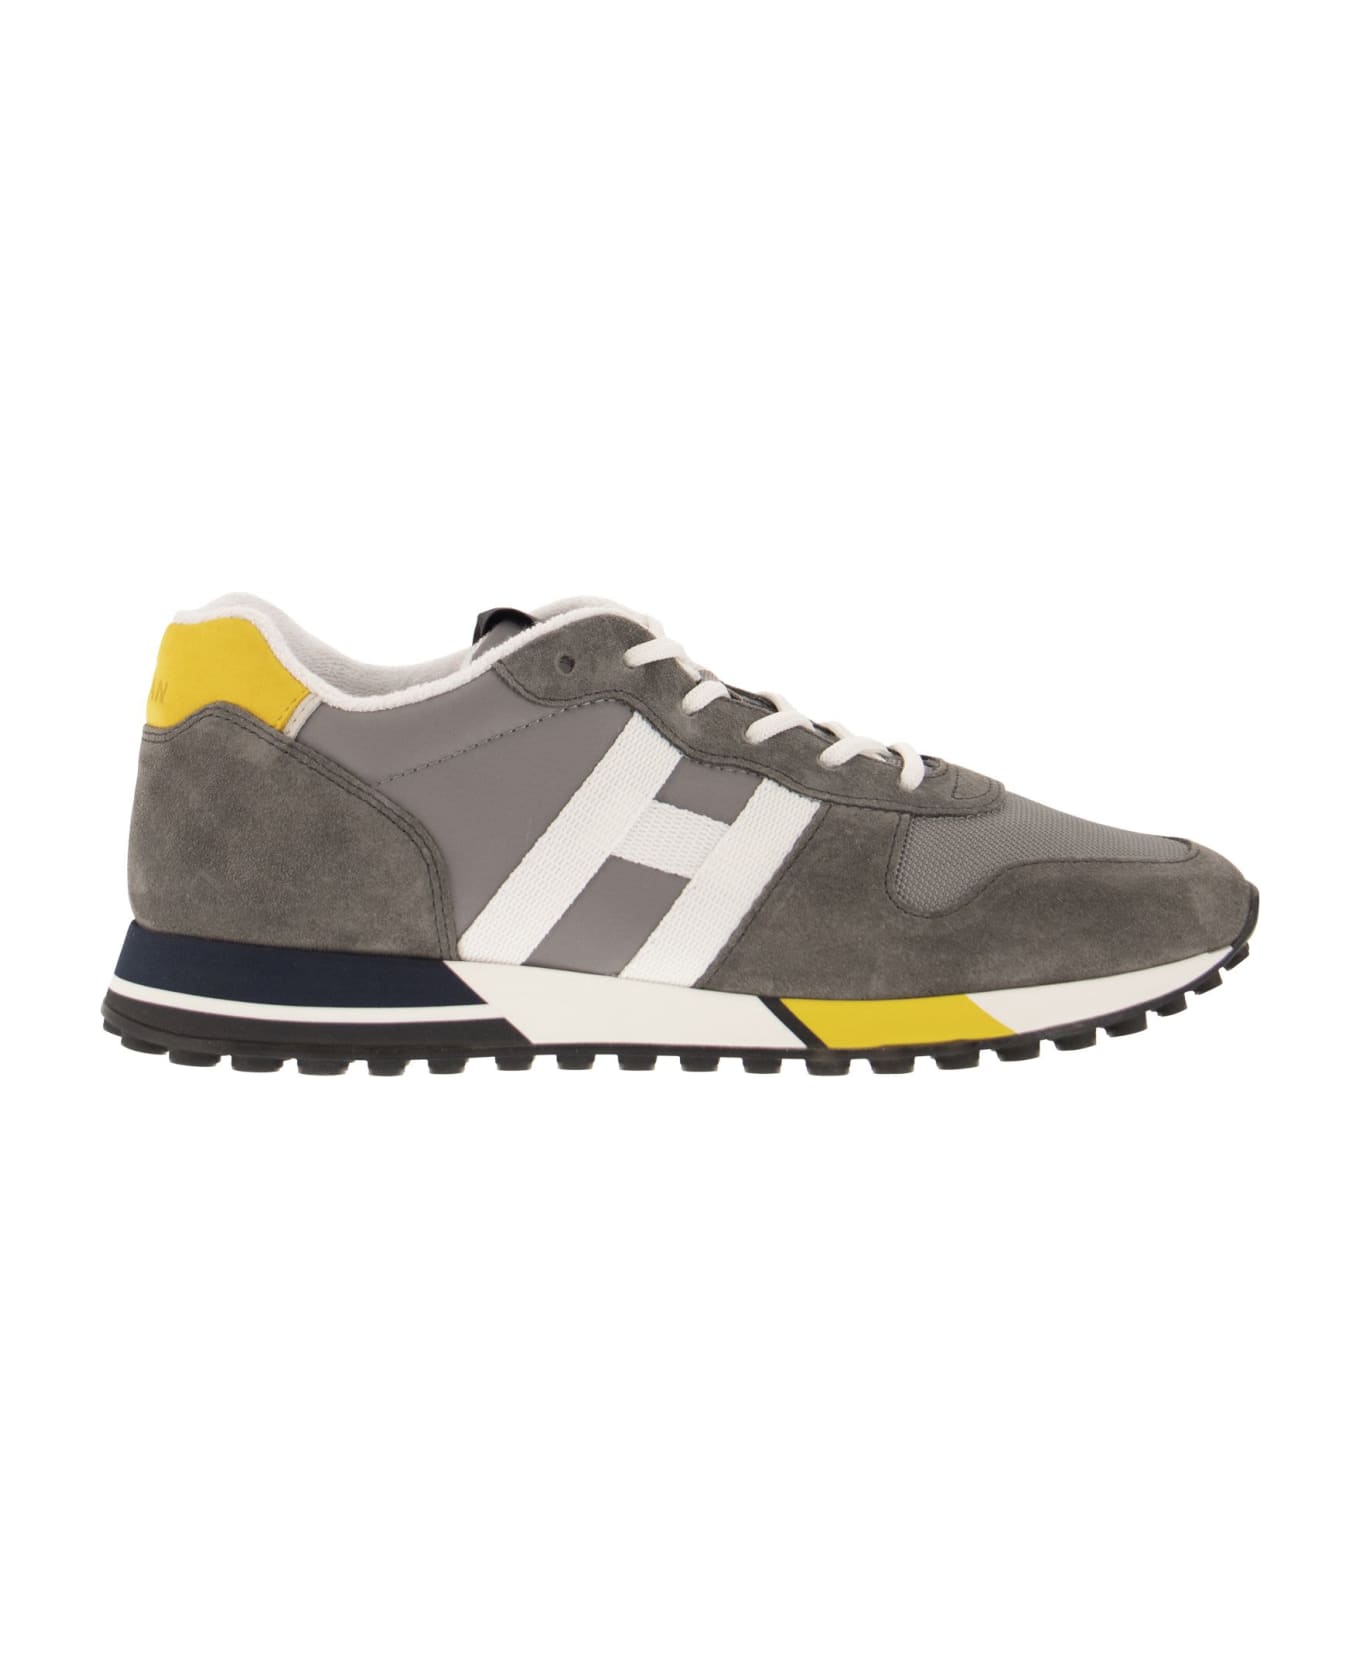 Hogan H383 Nastro Sneakers - Grey/white/yellow